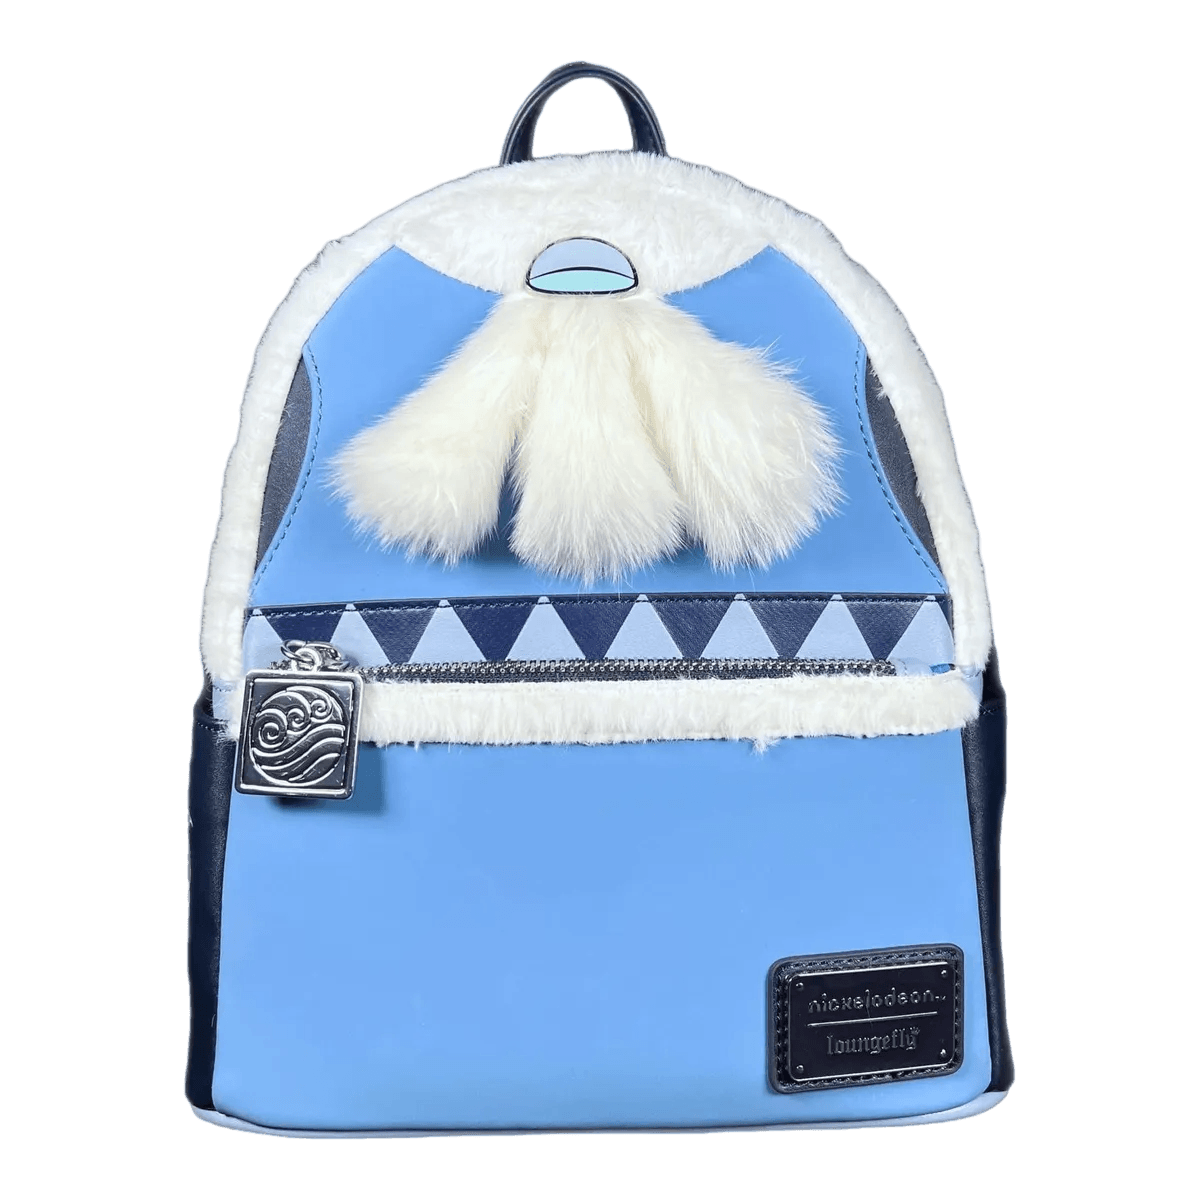 LOUNICBK0059 Avatar the Last Airbender - Katara Cosplay US Exclusive Mini Backpack [RS] - Loungefly - Titan Pop Culture